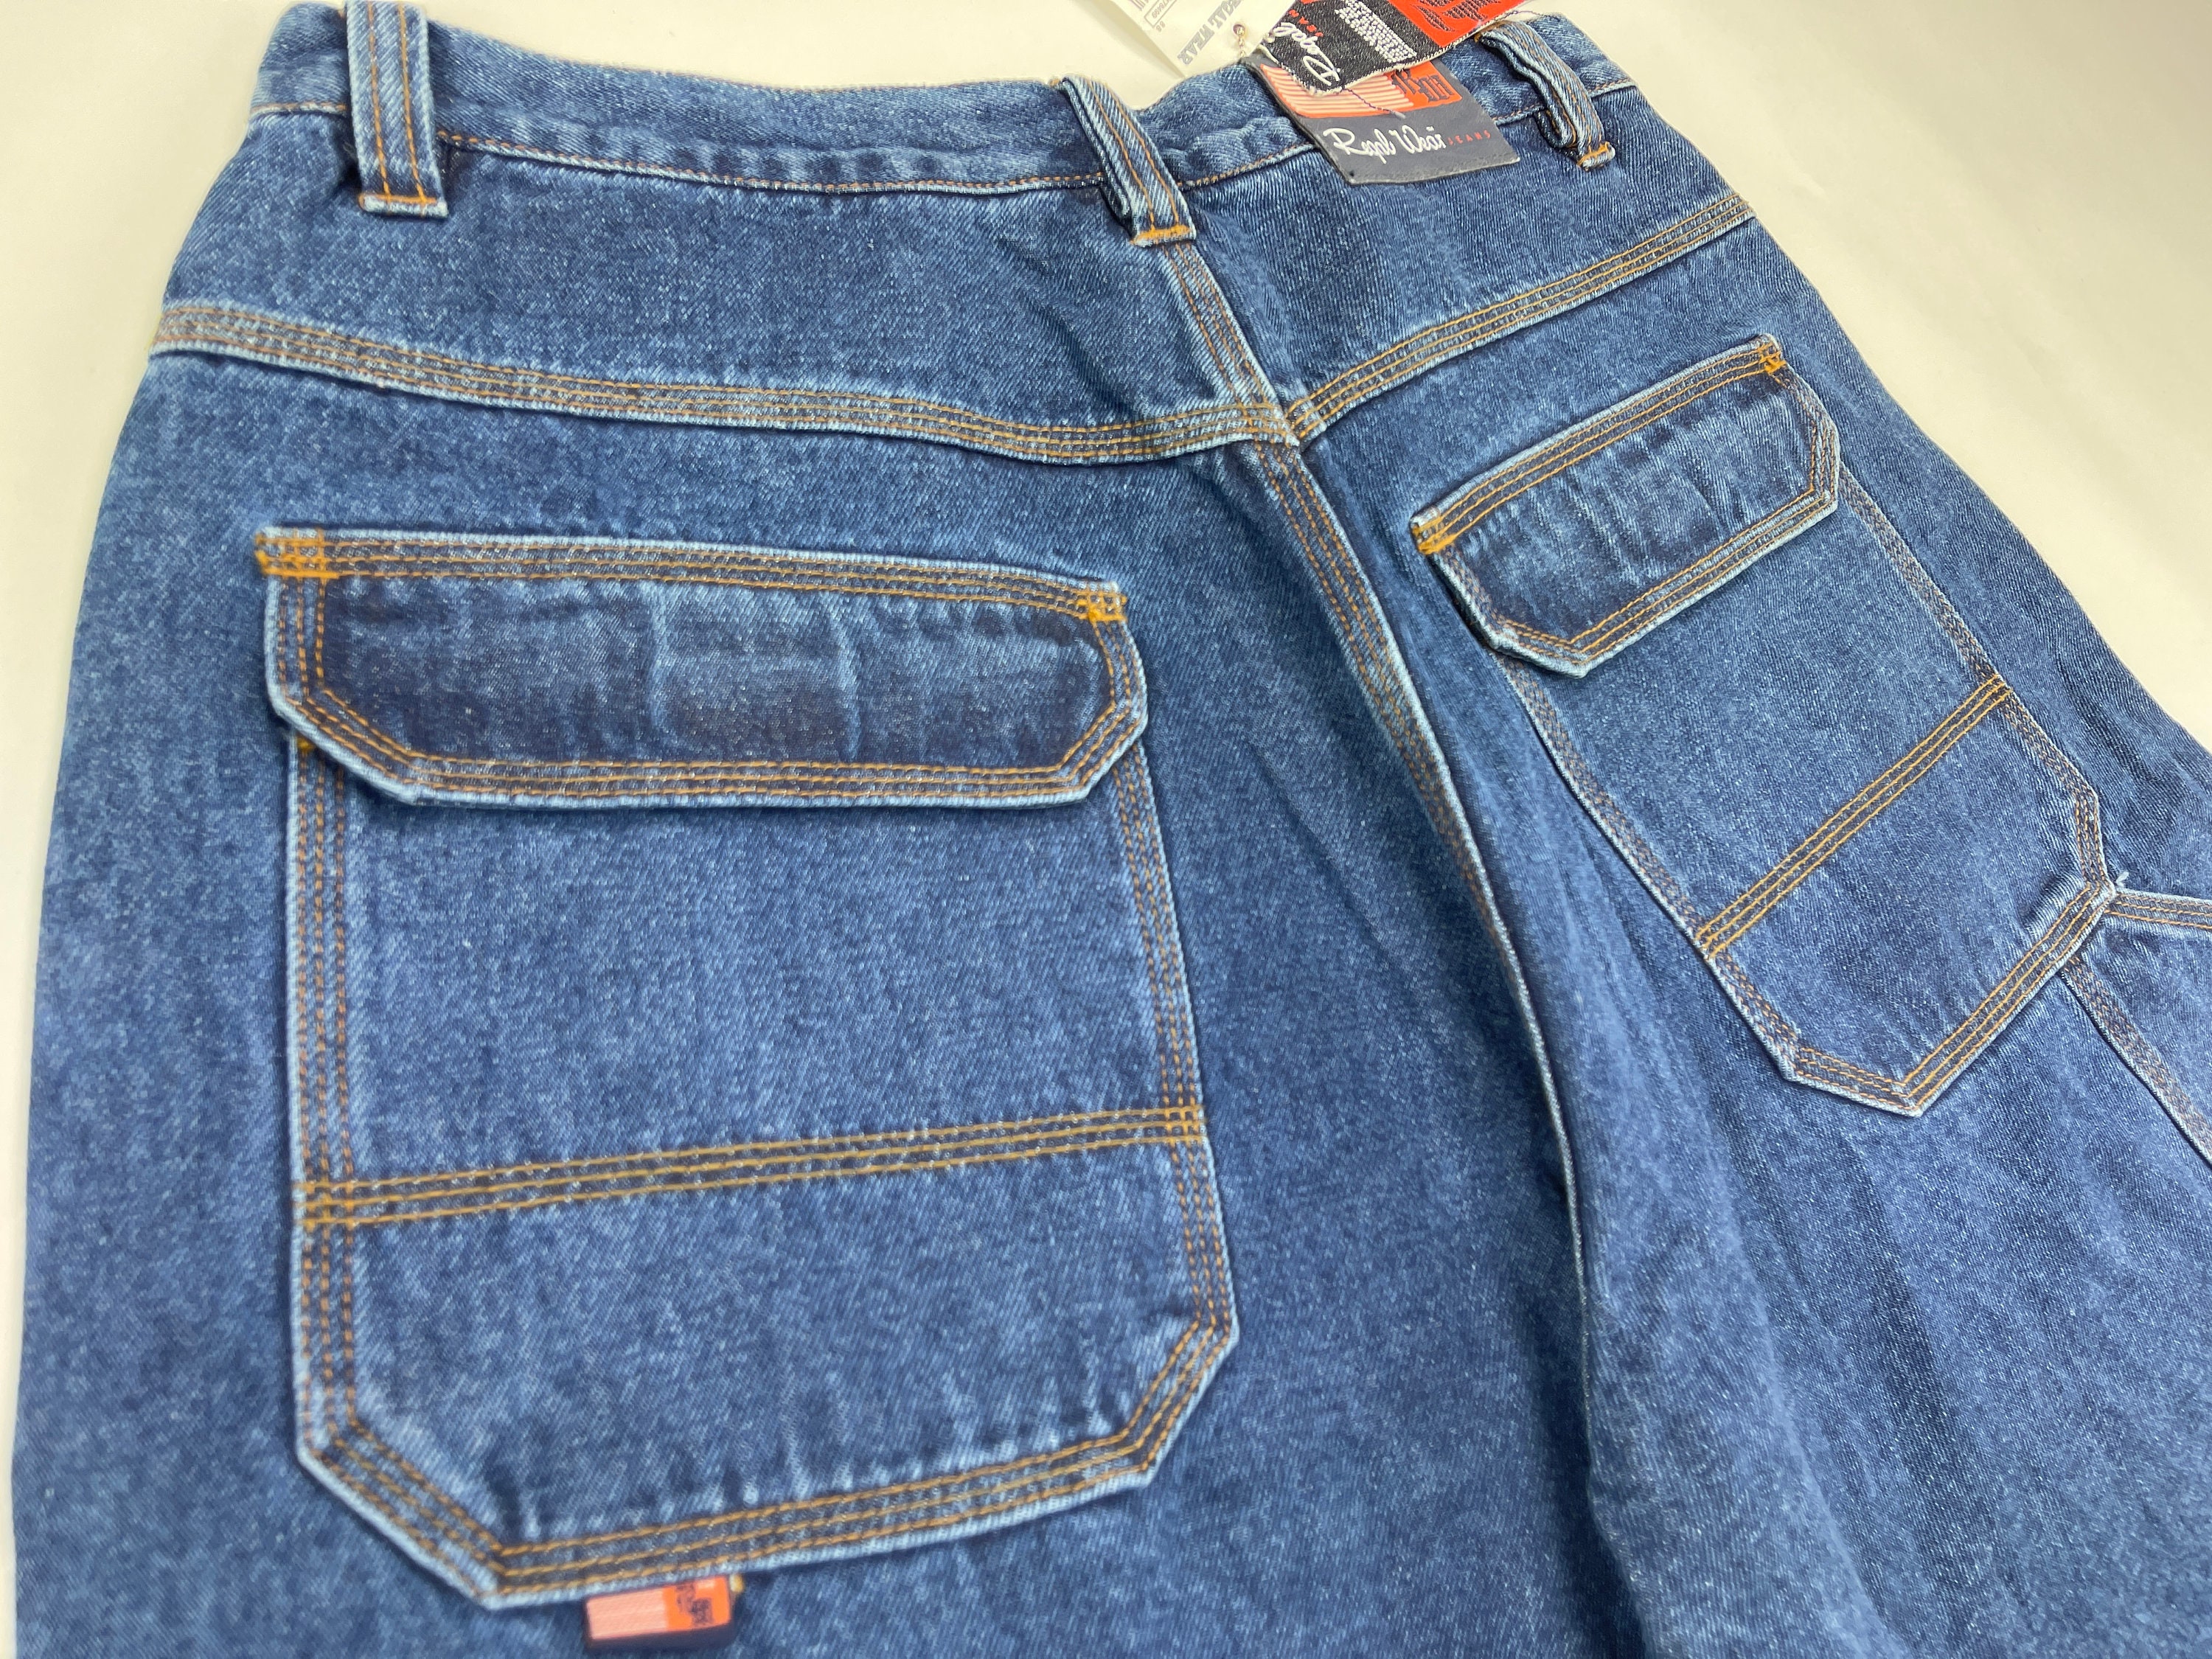 Regal Wear shorts vintage jeans 90s hip hop clothing 1990s | Etsy